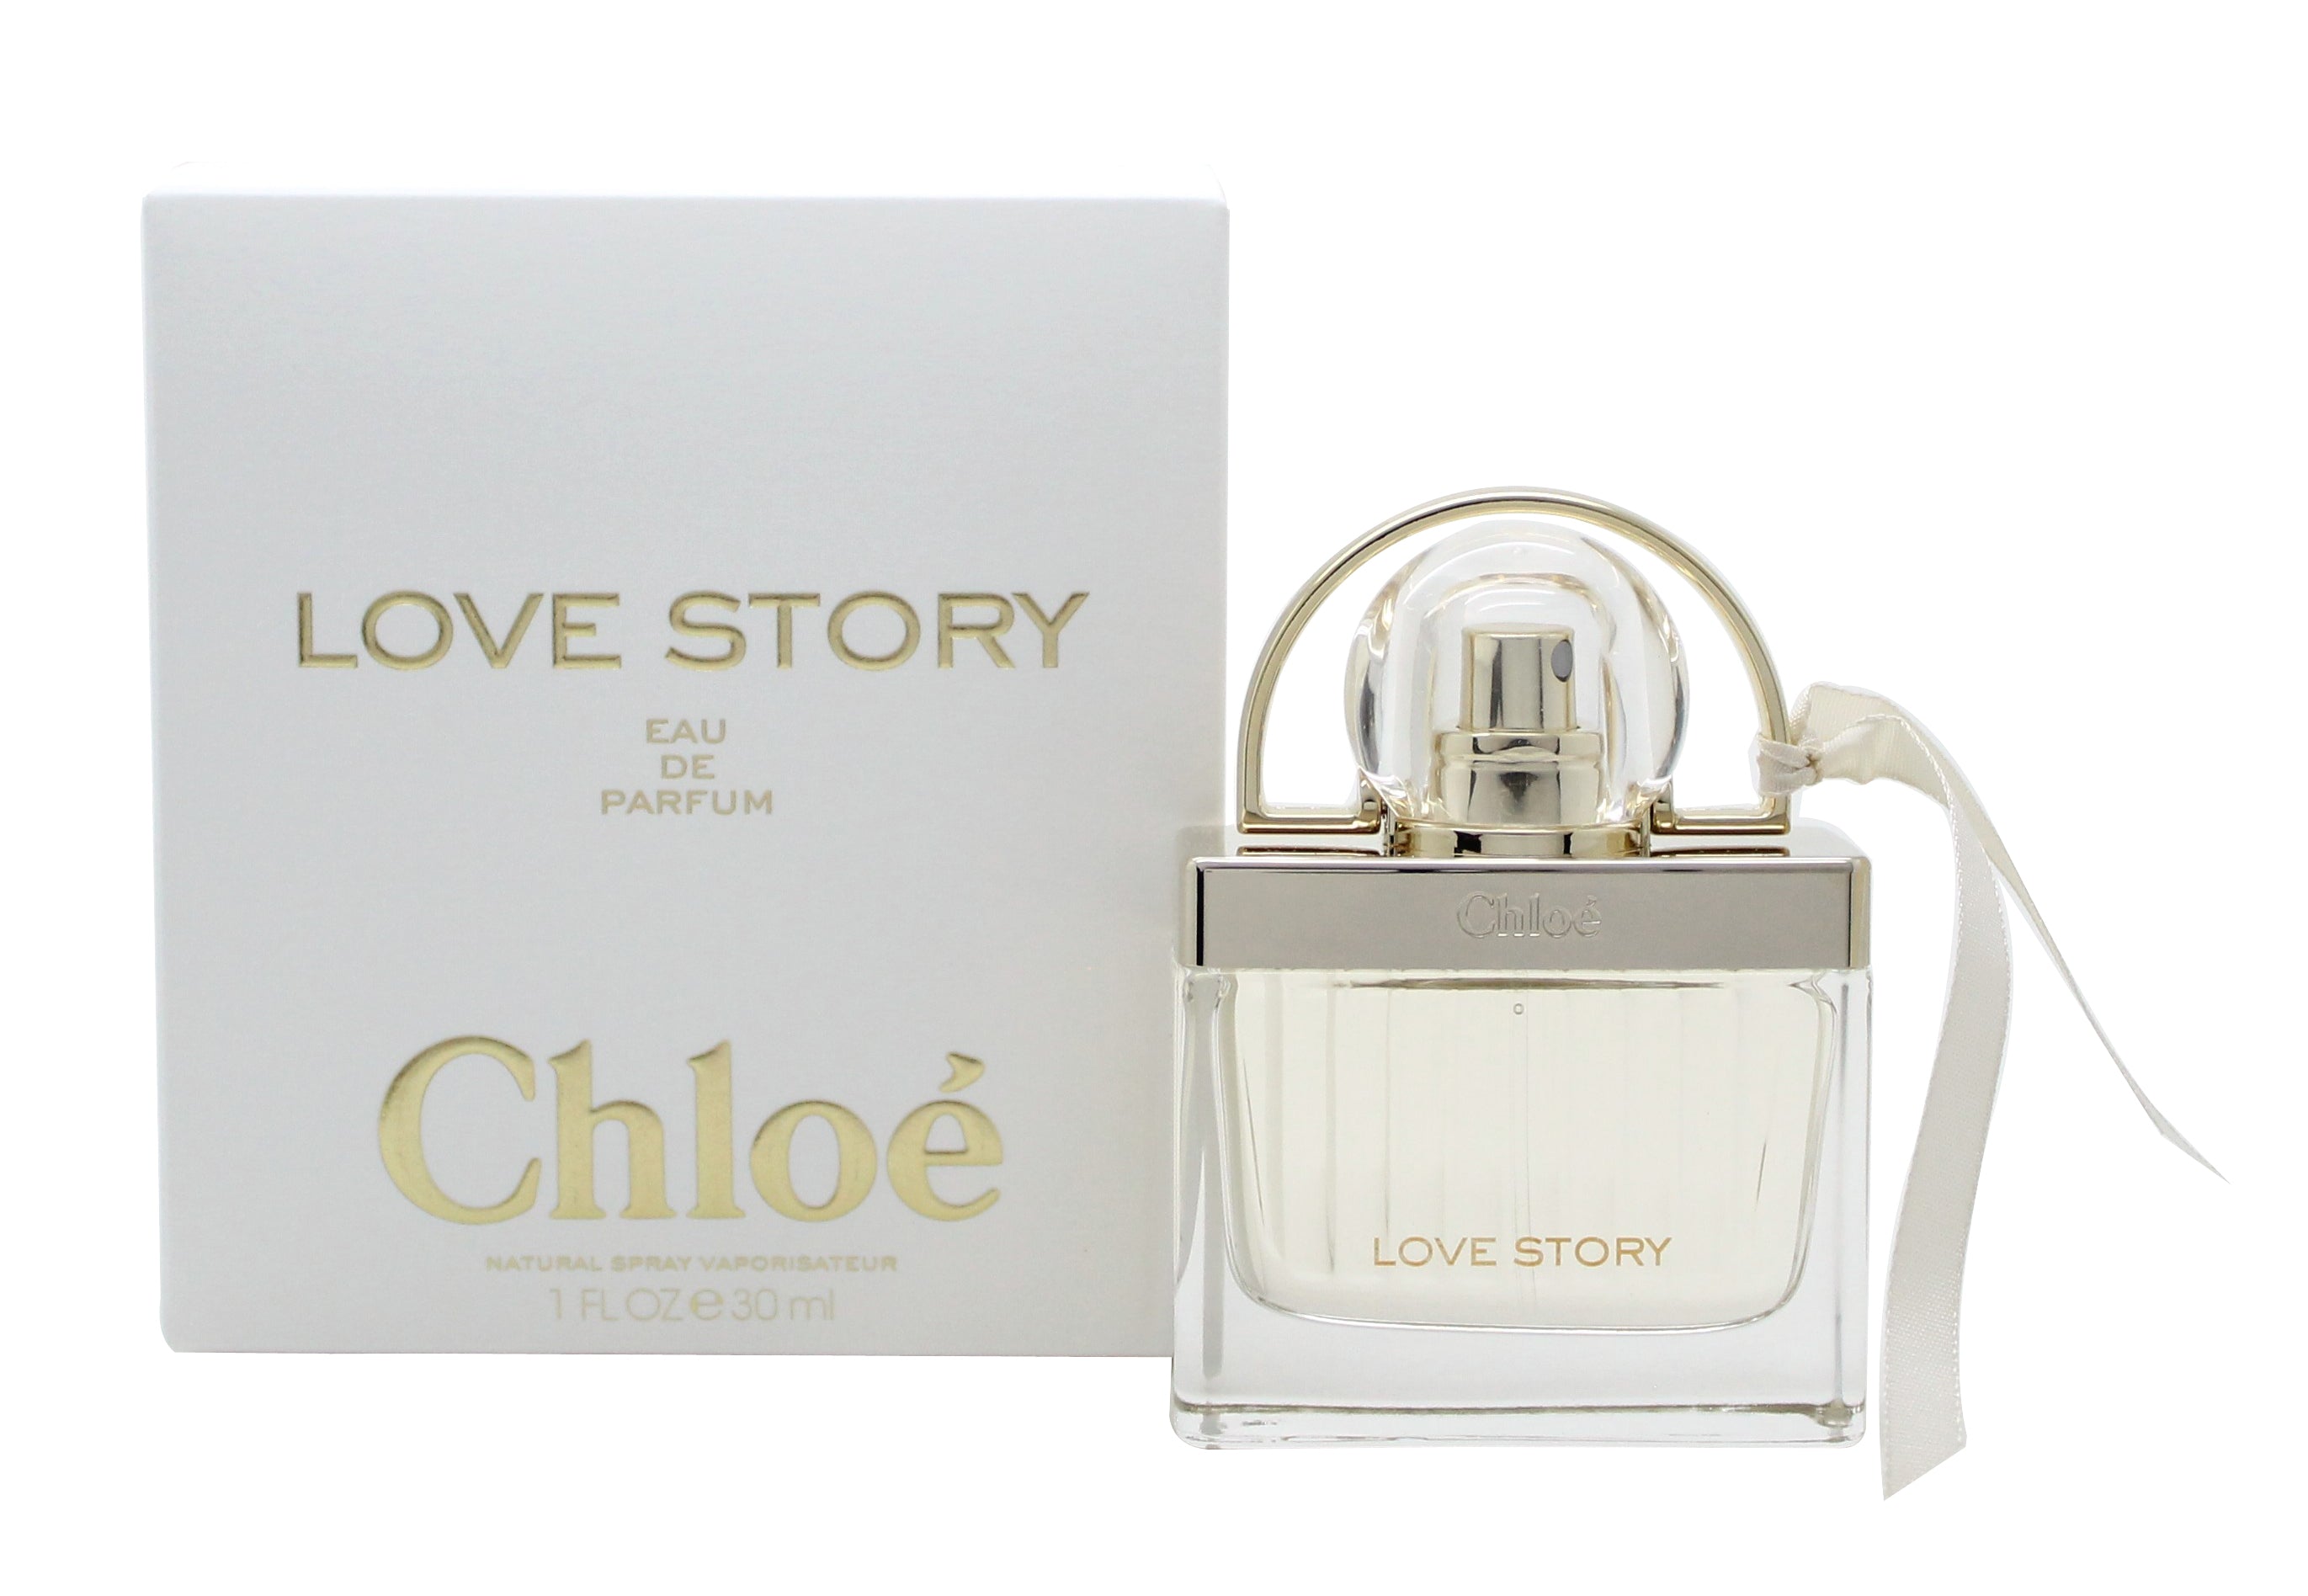 View Chloé Love Story Eau de Parfum 30ml Spray information